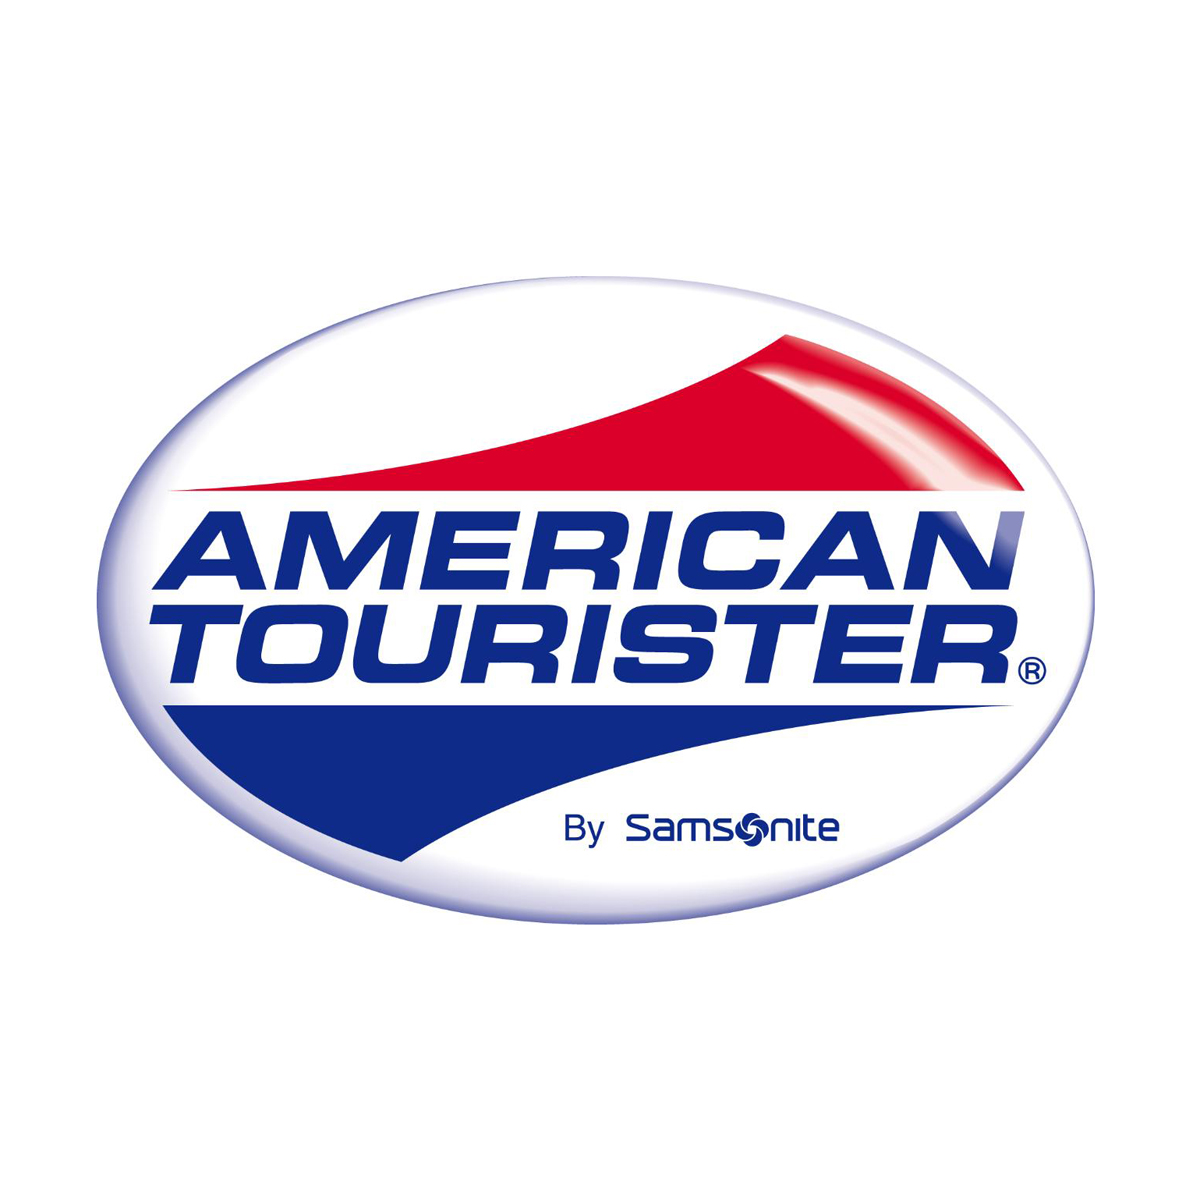 american-tourister-logo-111773.jpg